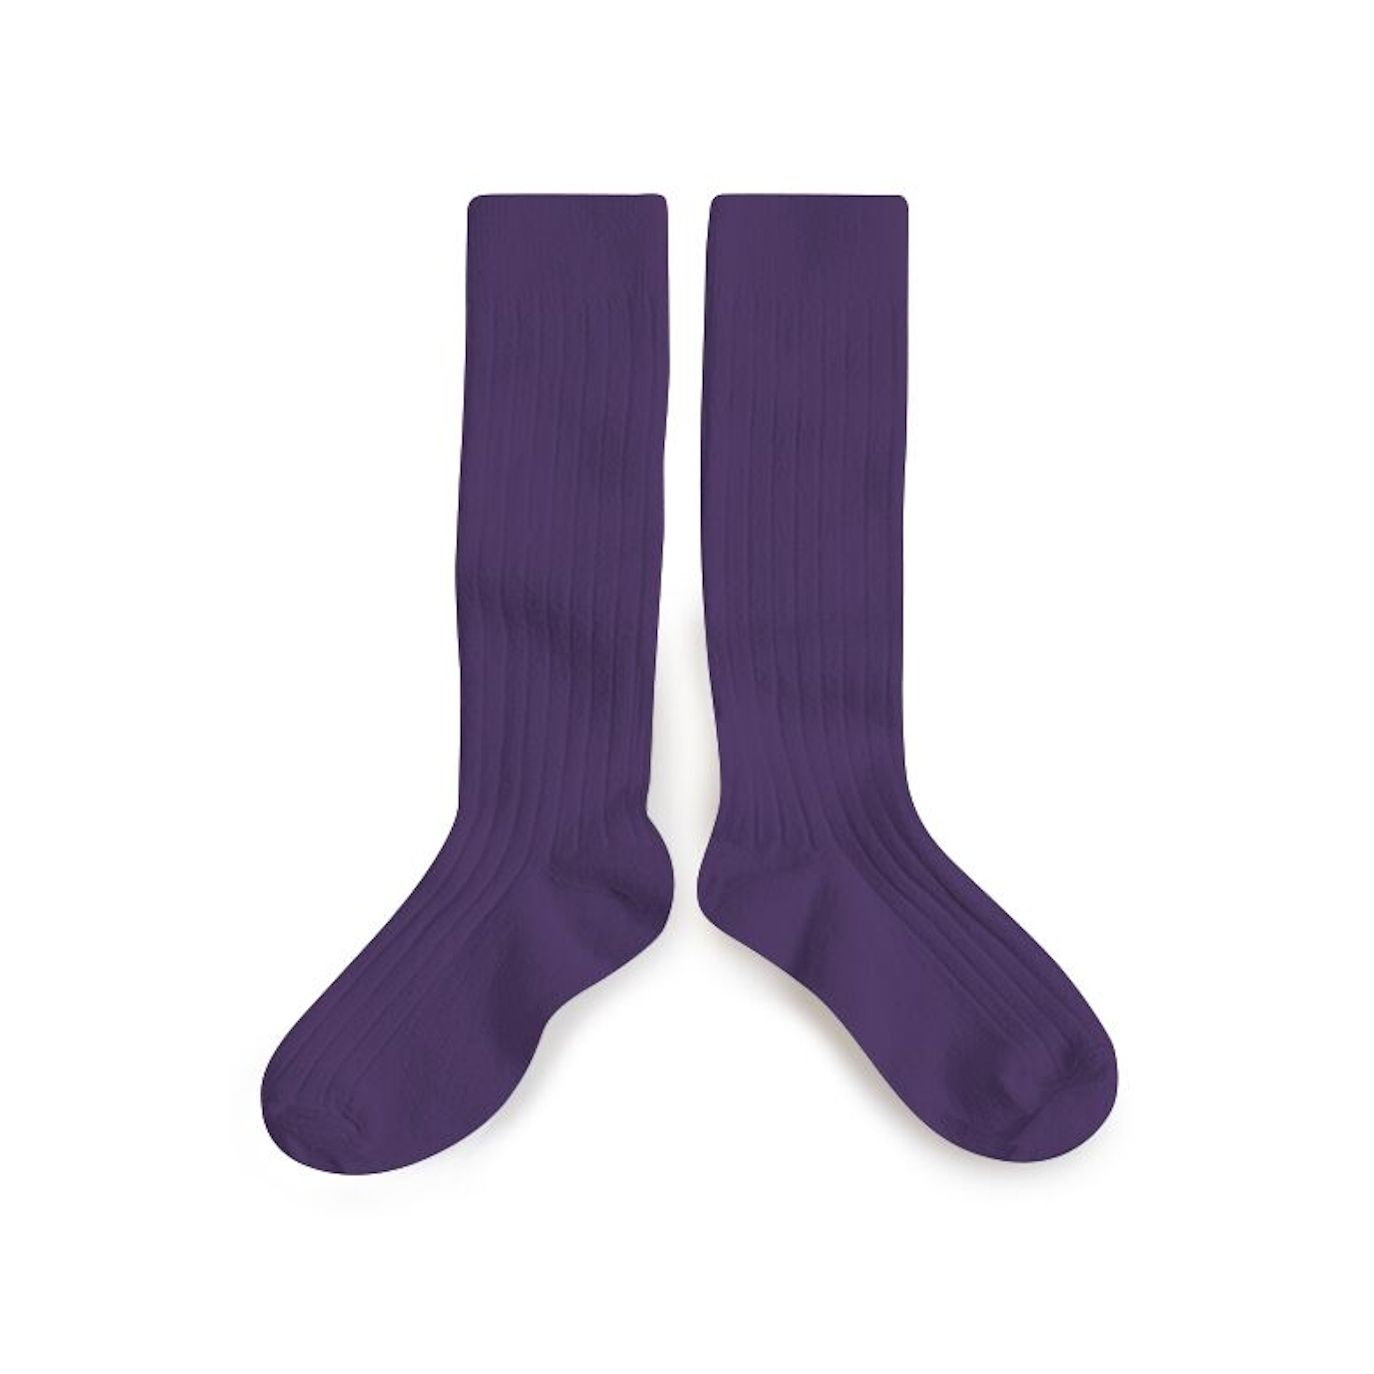 Collégien Knee high socks La Haute iris de provence 2950 771 La